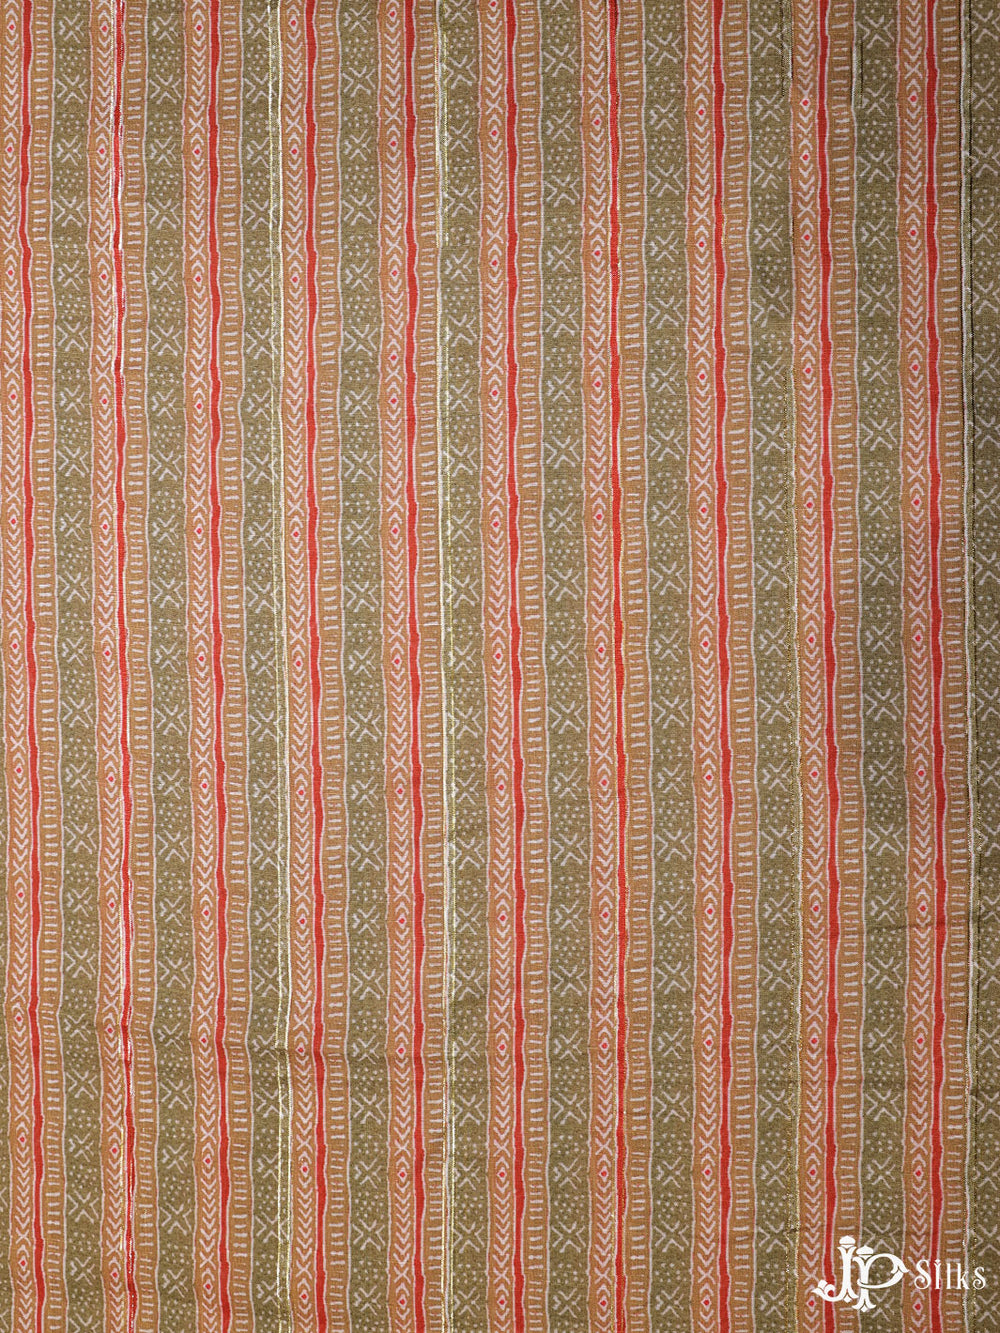 Multicolor Digital Printed Munga Cotton Fabric - E3329 - View 1